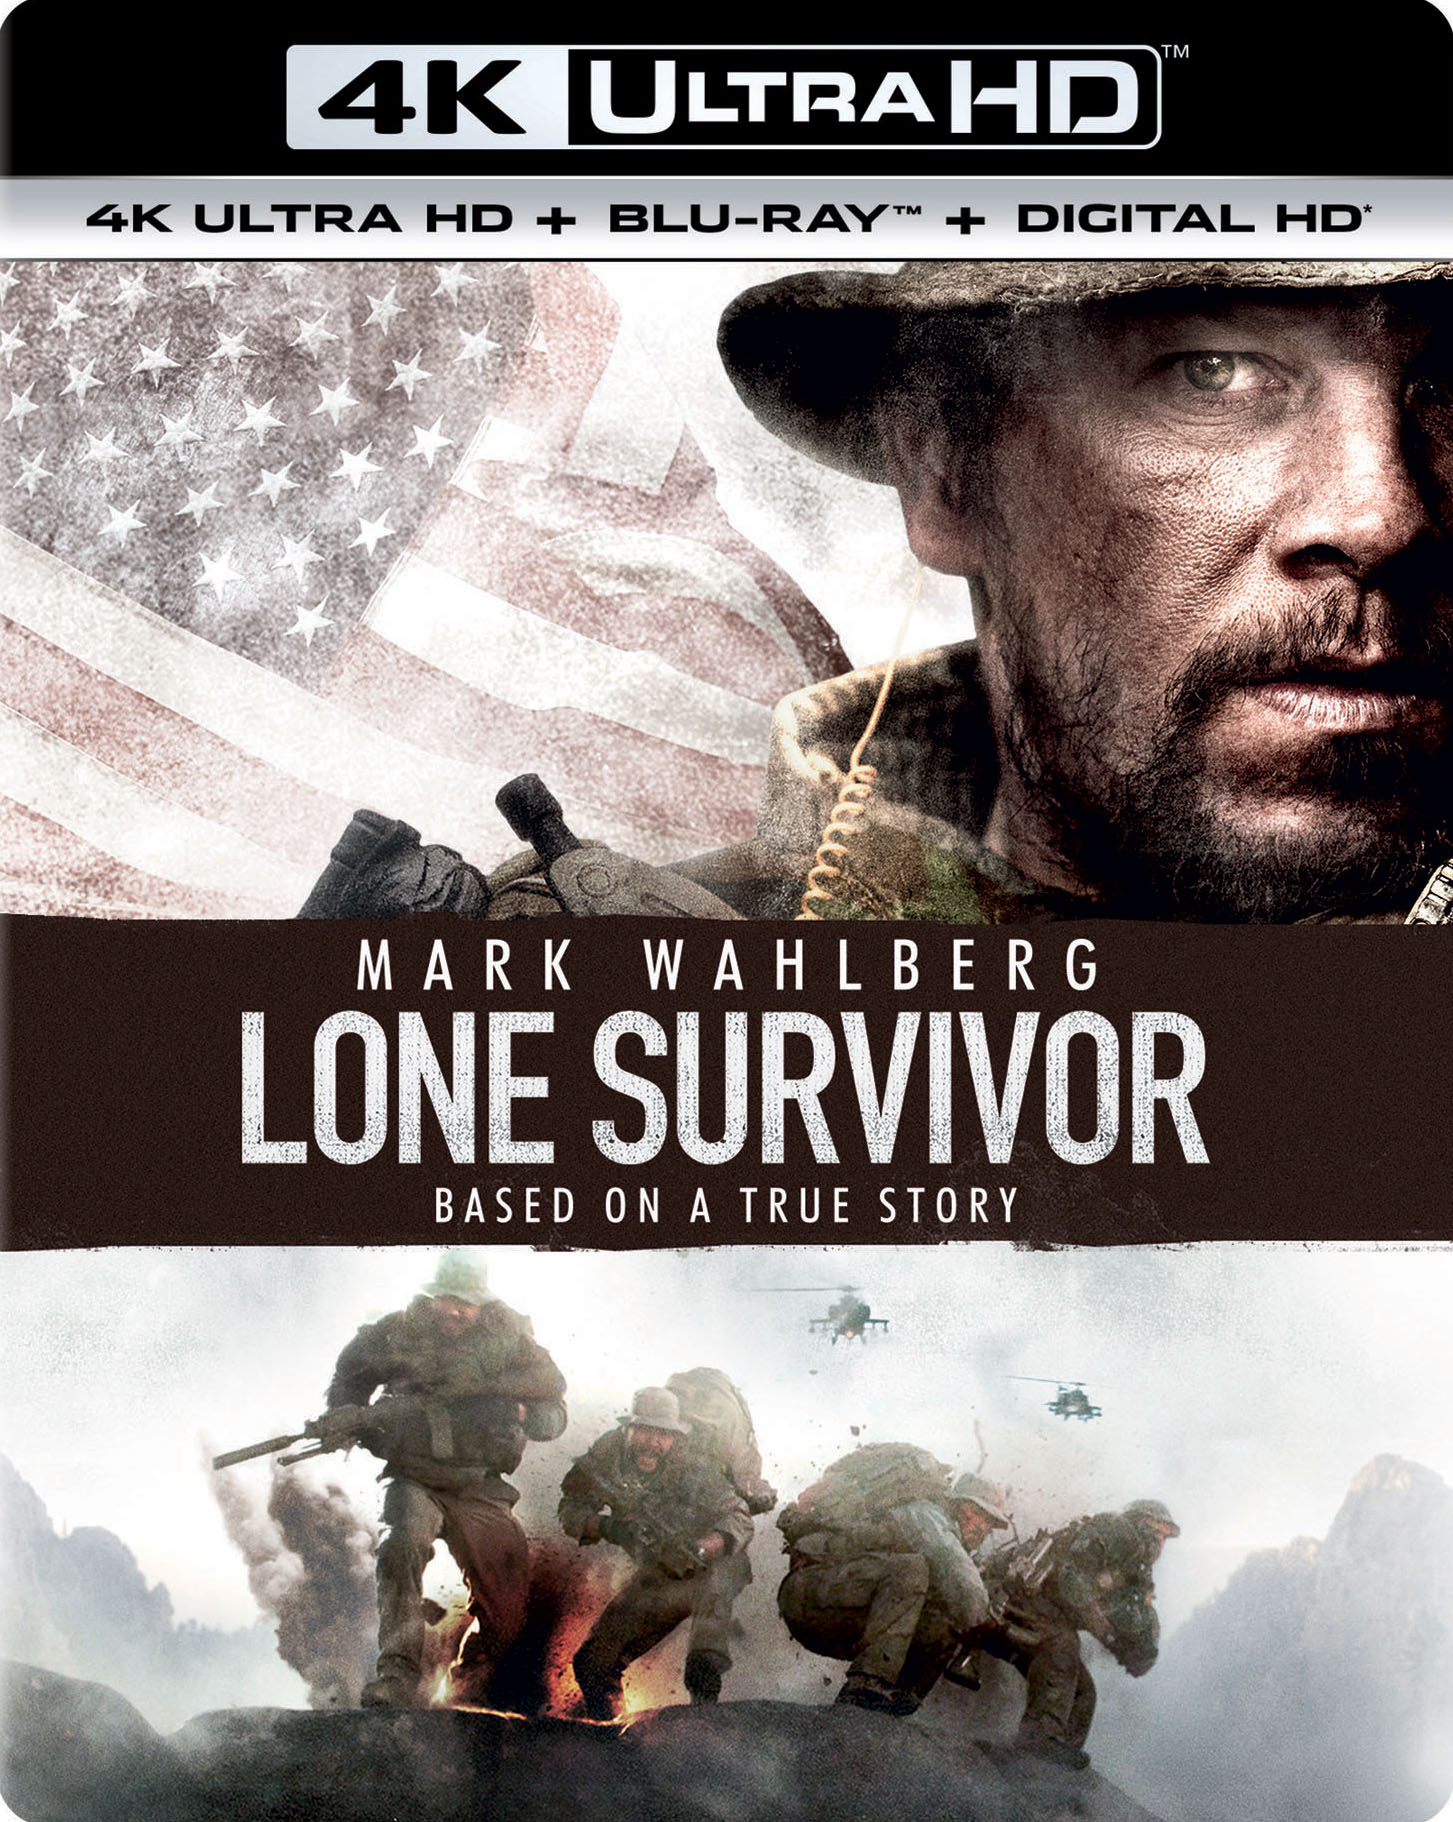 Lone Survivor review